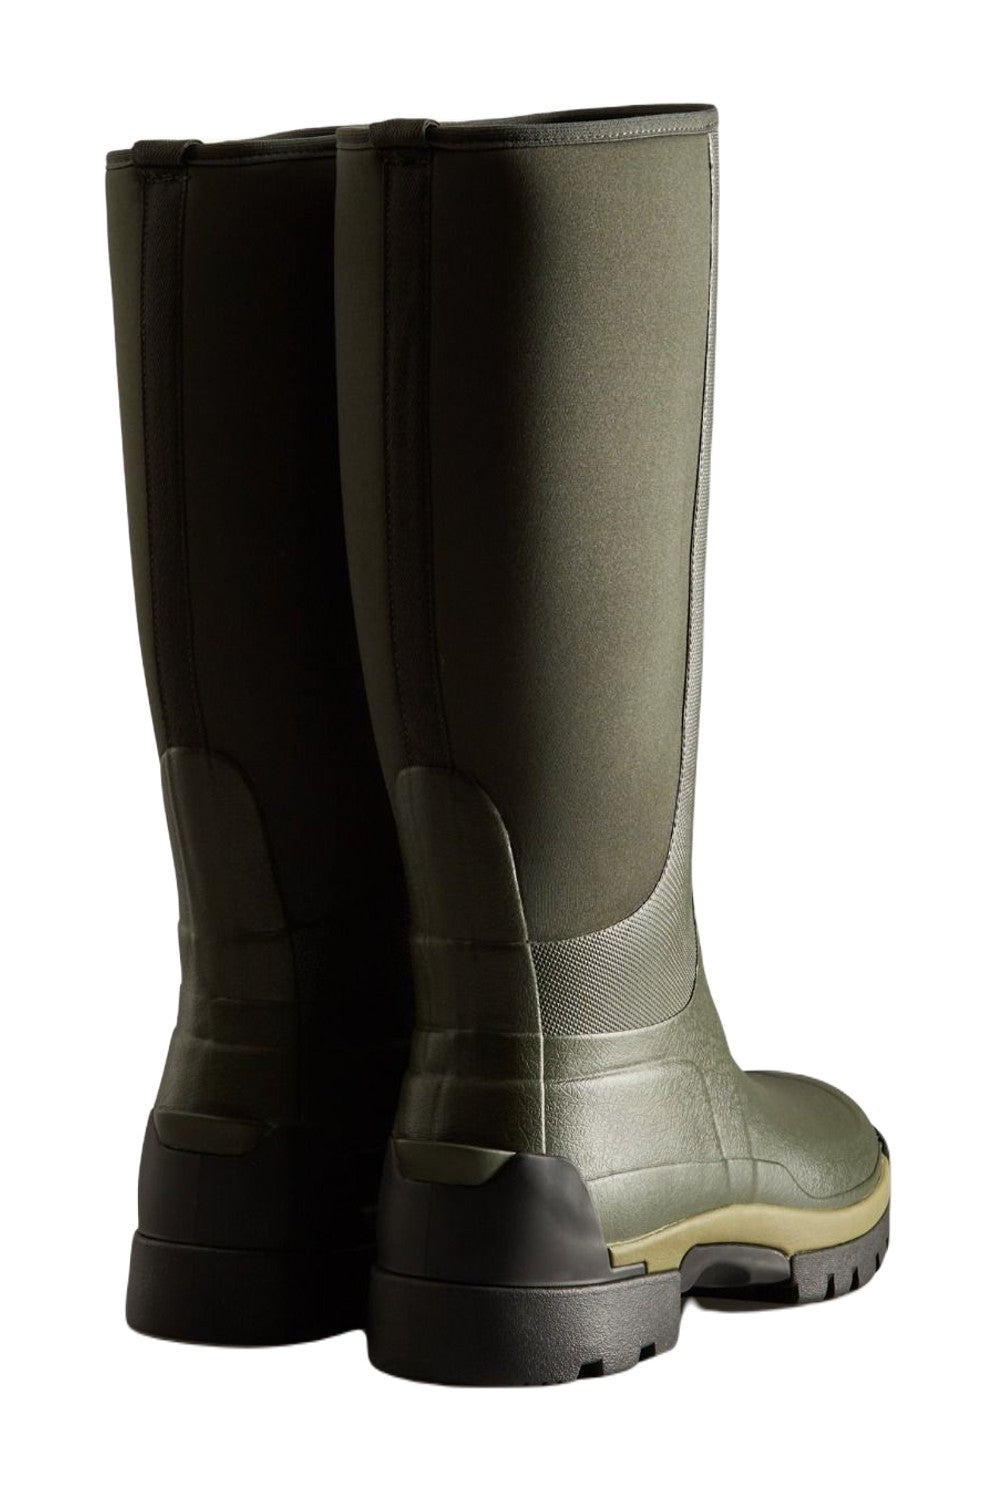 Hunter Mens Balmoral Hybrid Tall Wellington Boots In Dark Olive 